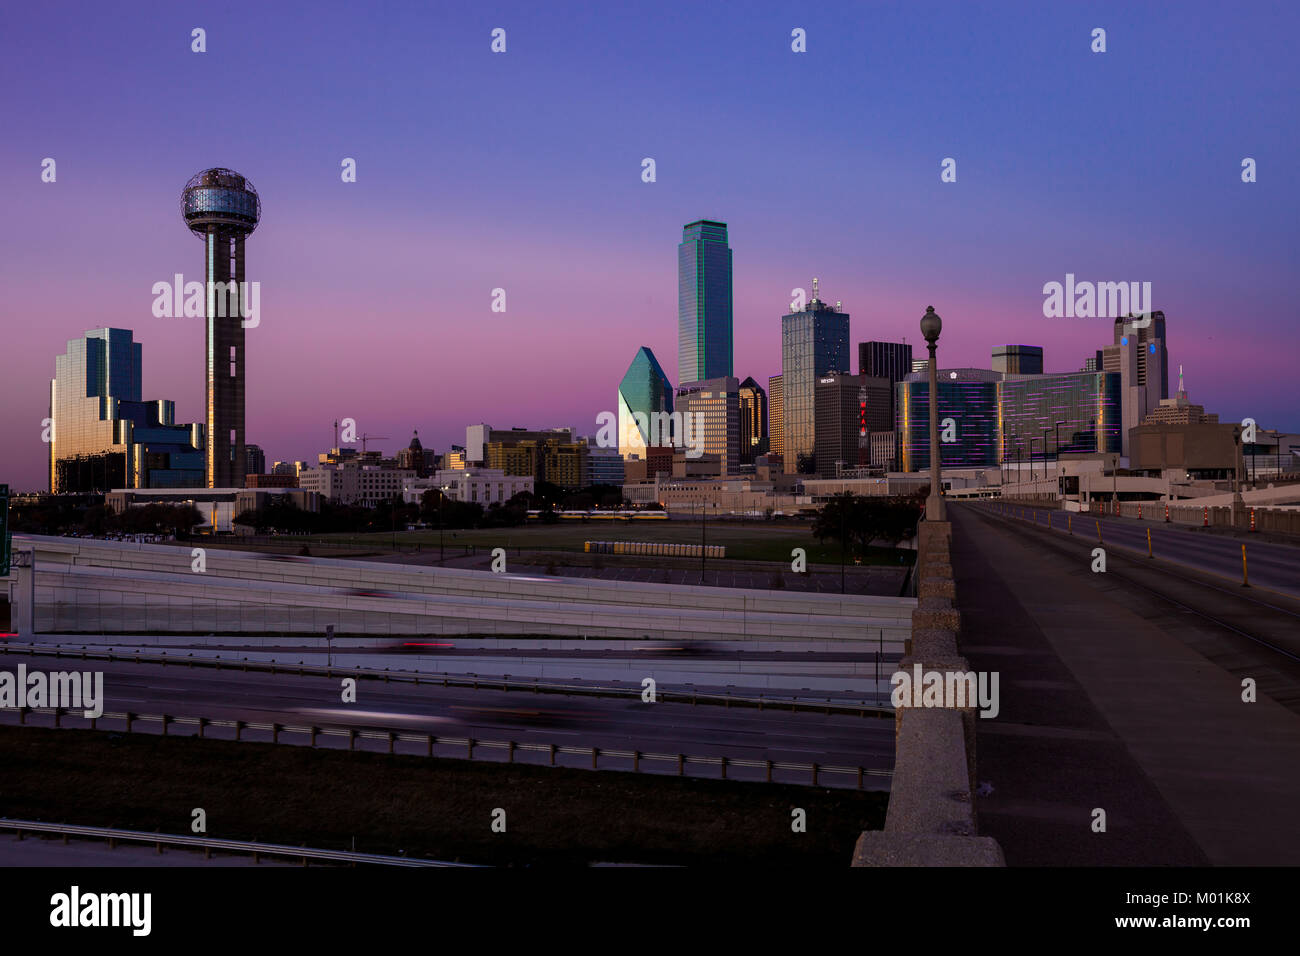 DALLAS, Texas - Dezember 10, 2017 - Blick auf Dallas cityskape vom Houston St. Viadukt Brücke Stockfoto